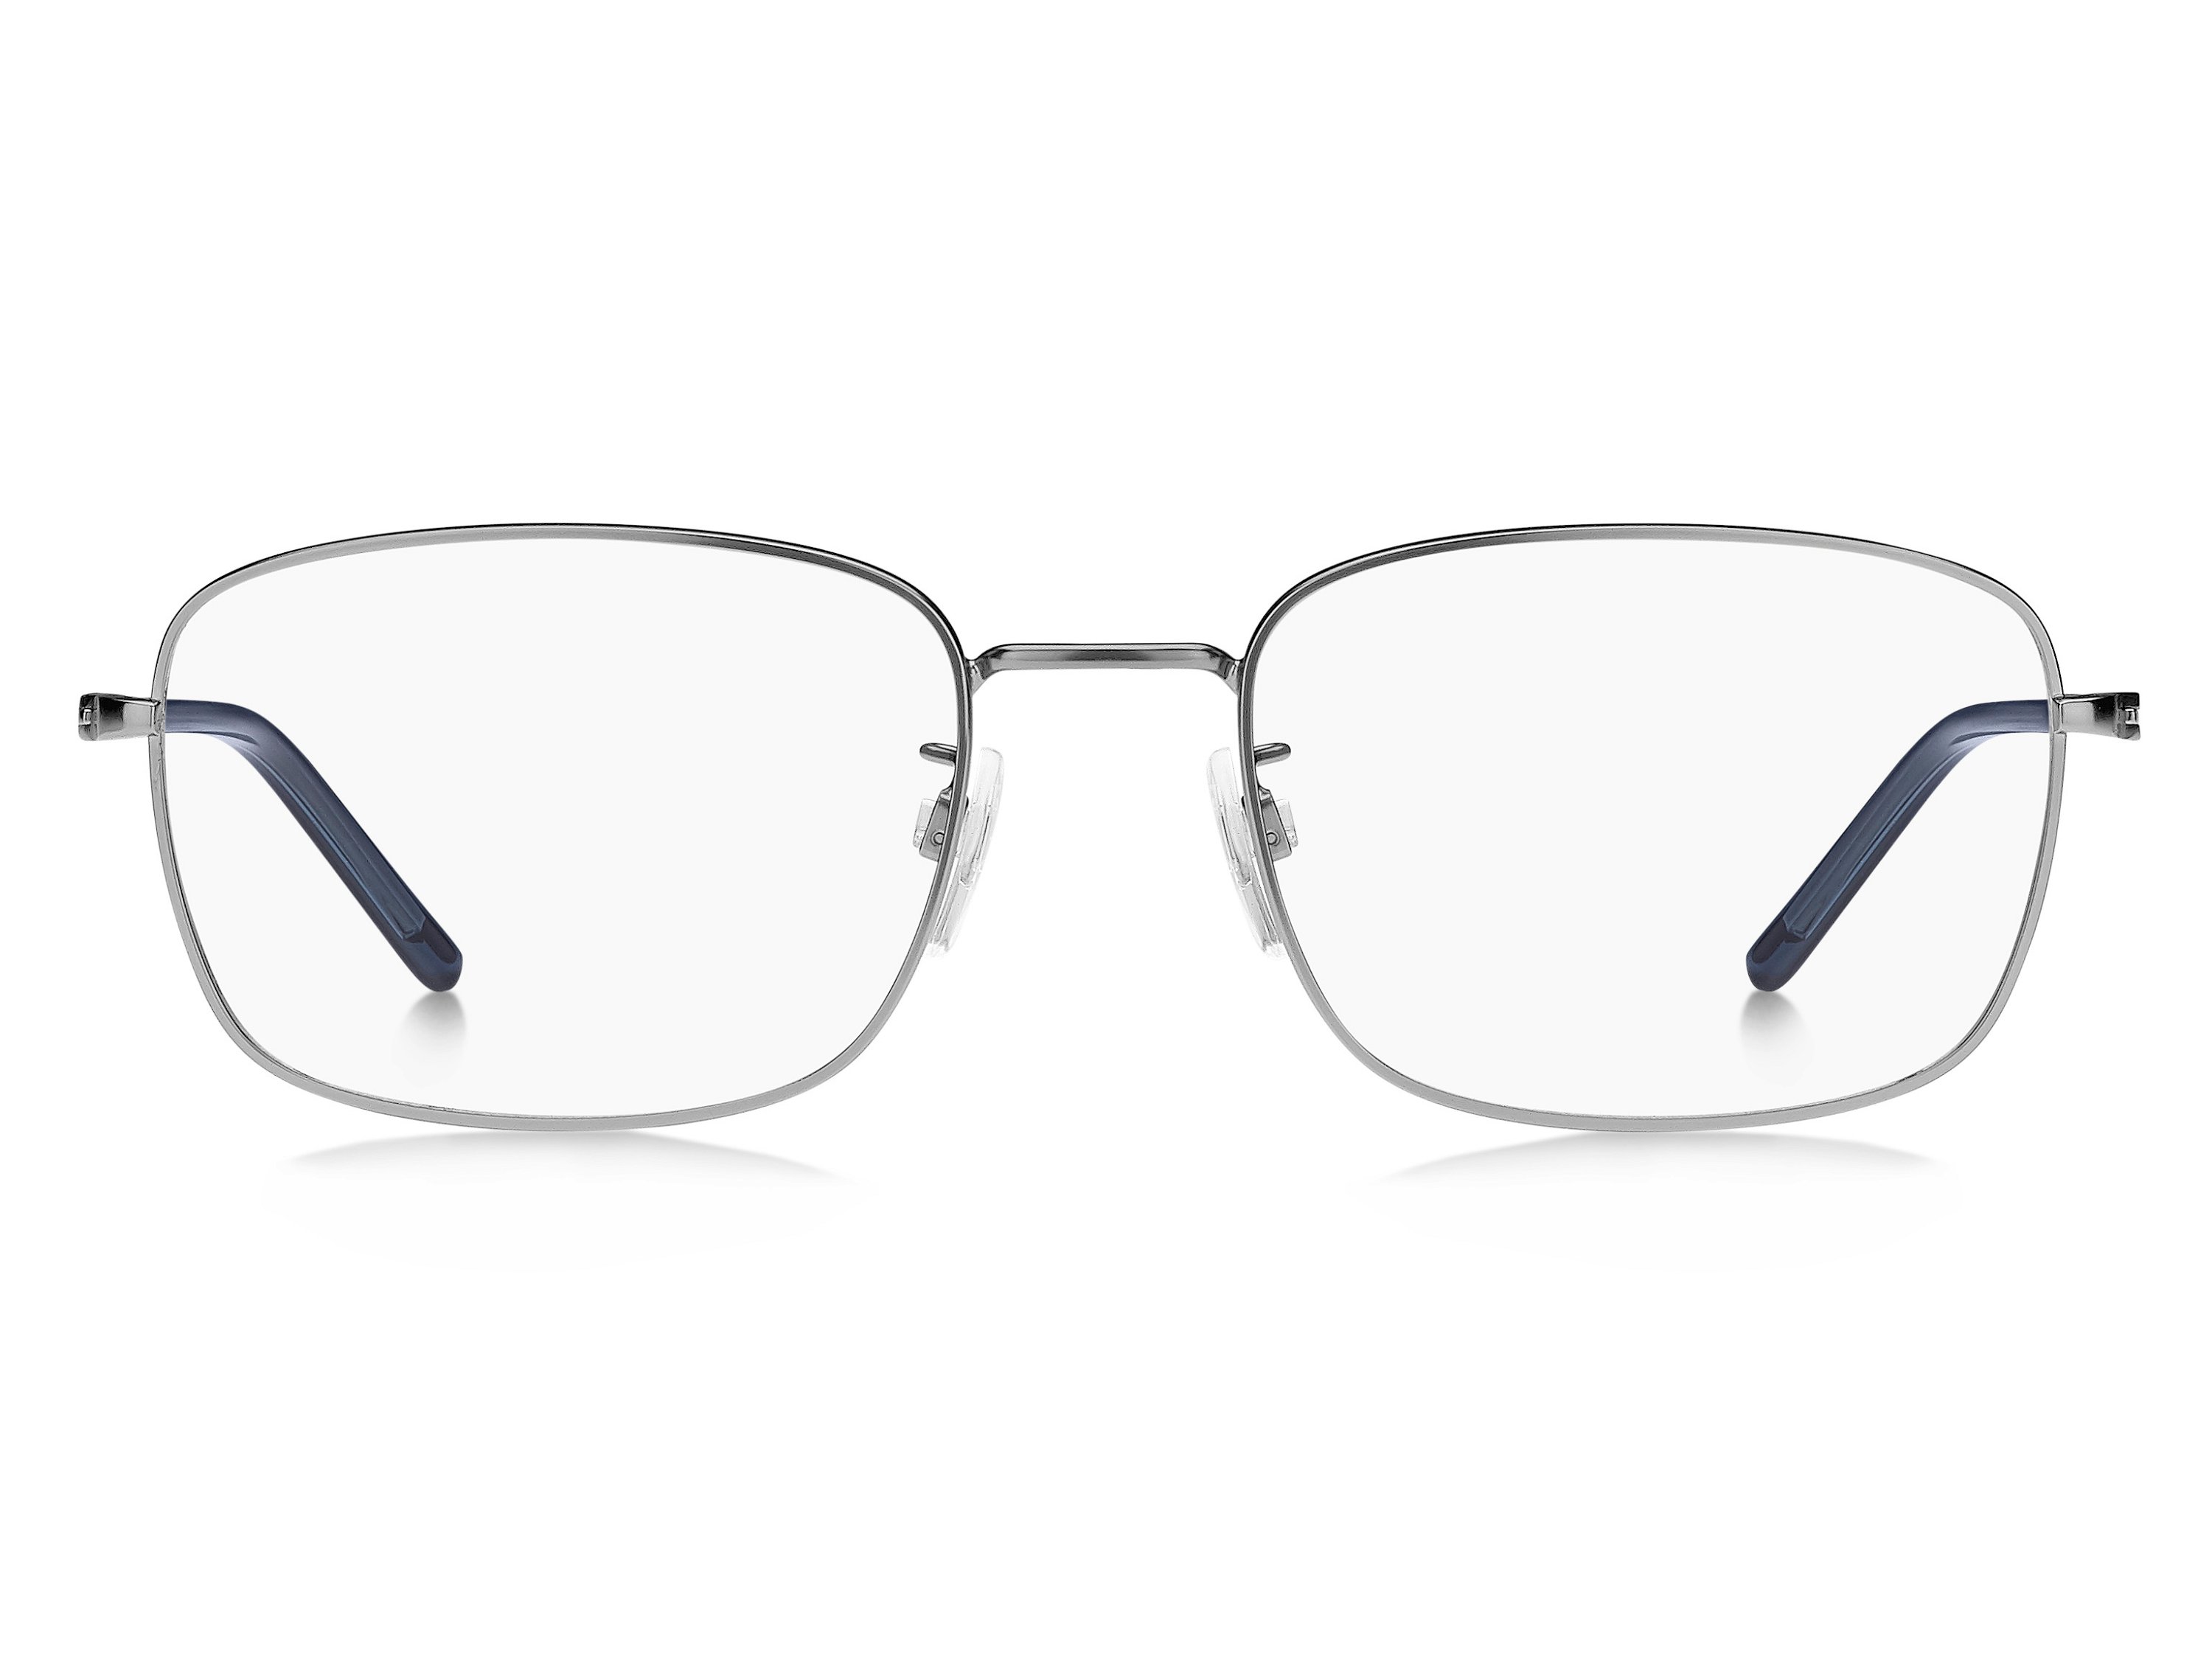 Tommy Hilfiger Brille TH1934/F R81 55 grau matt